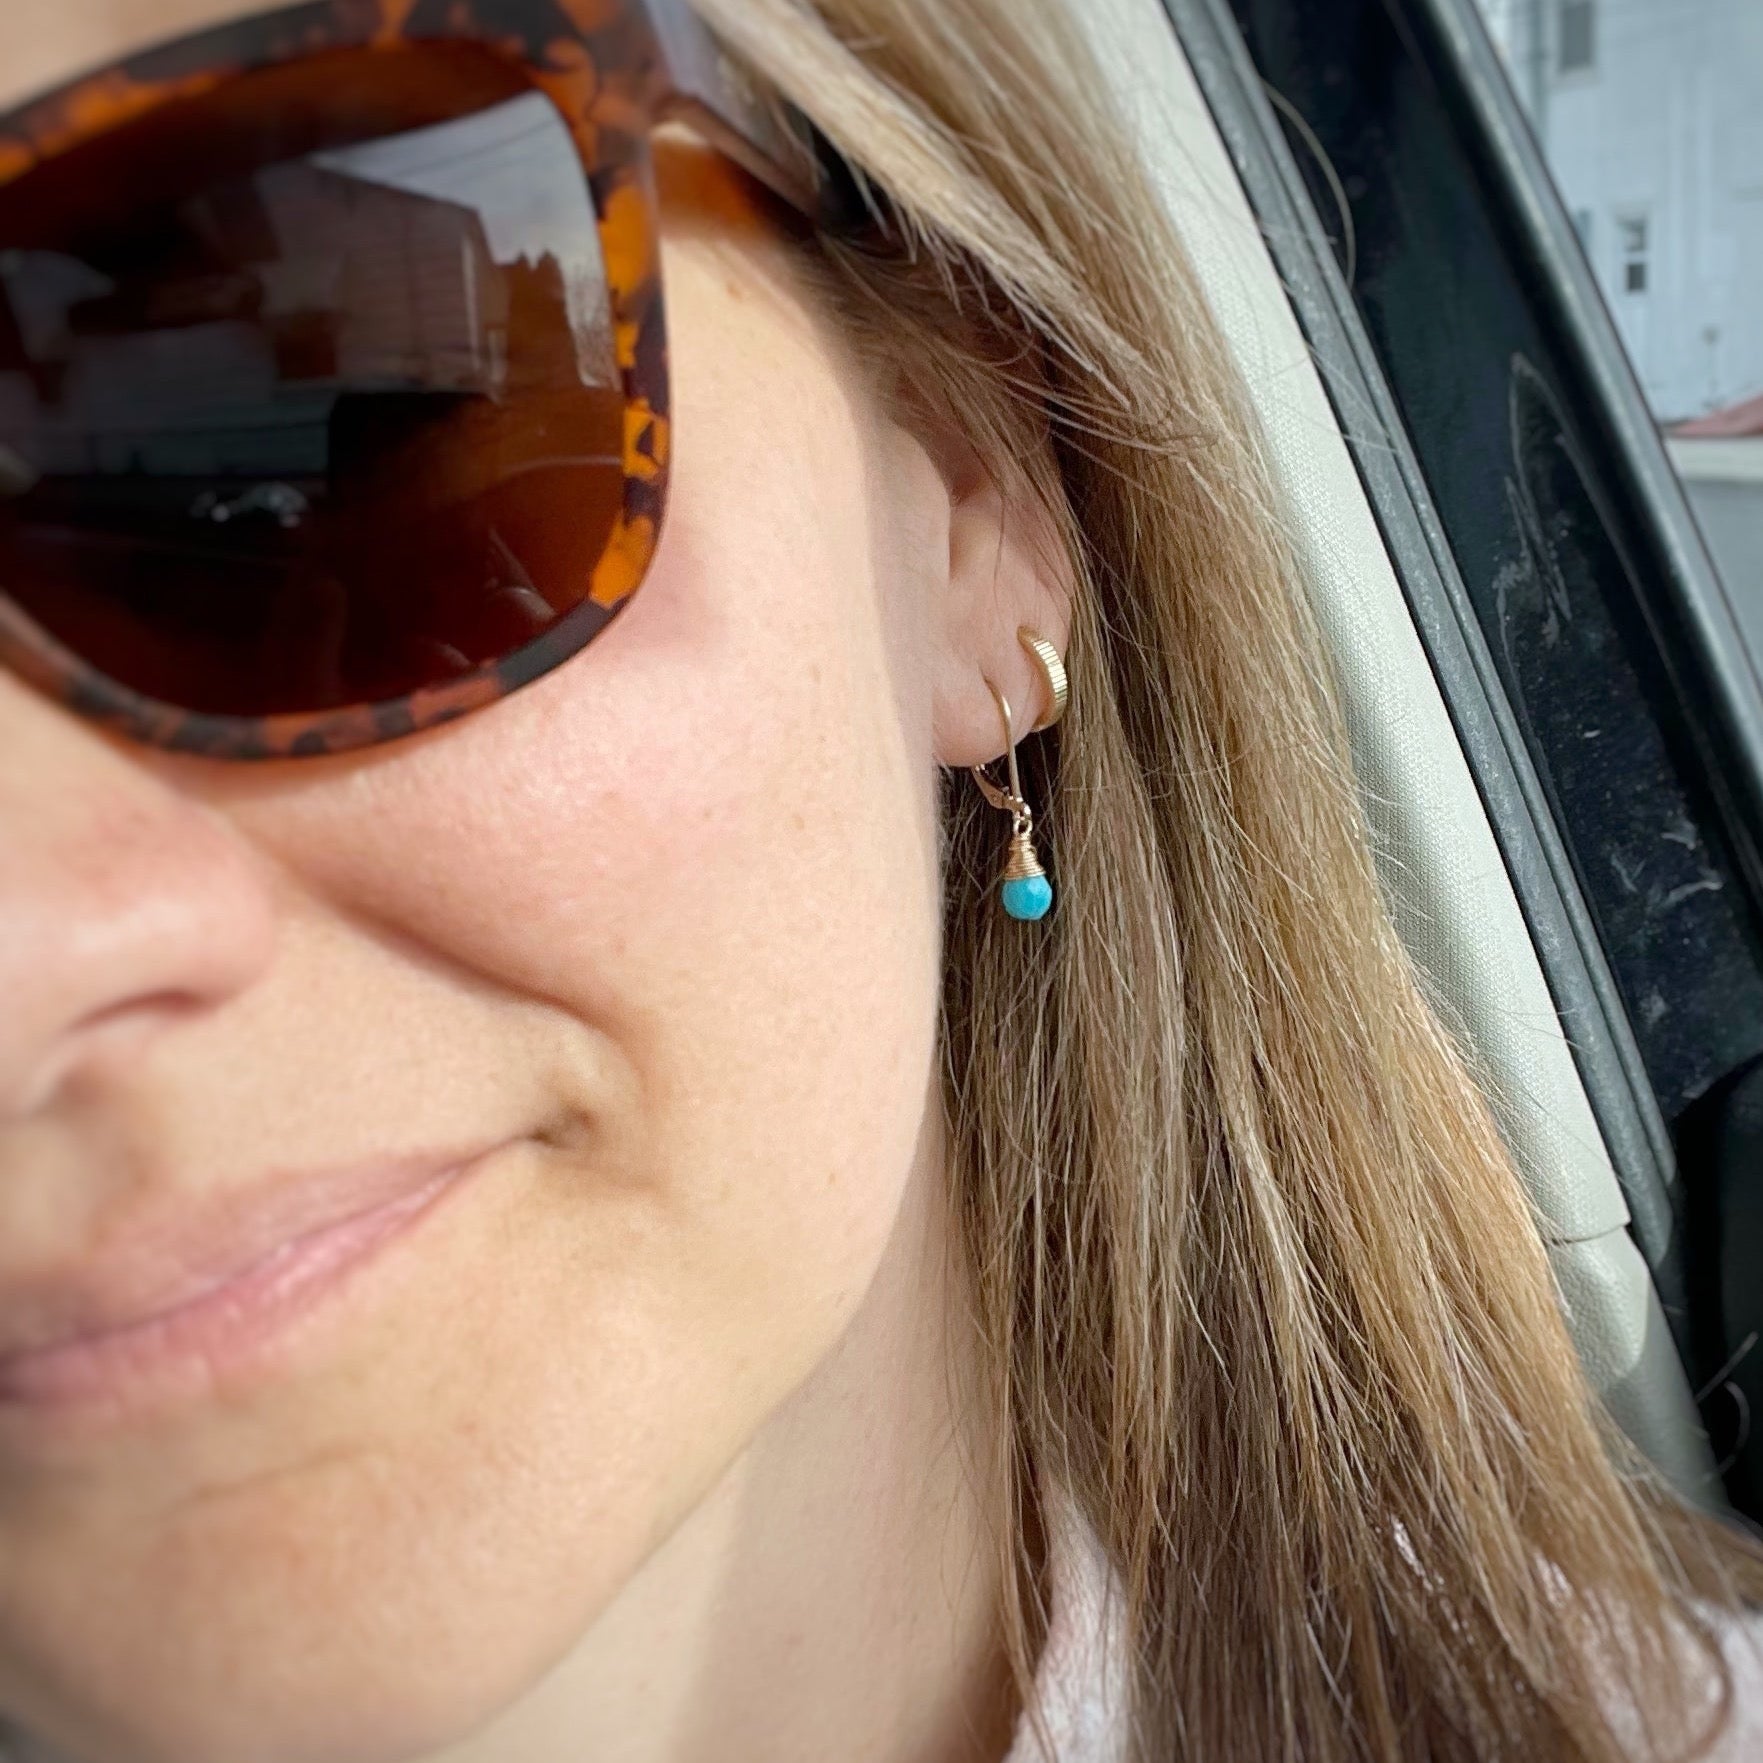 Turquoise Drop Earrings - Sarah Cornwell Jewelry